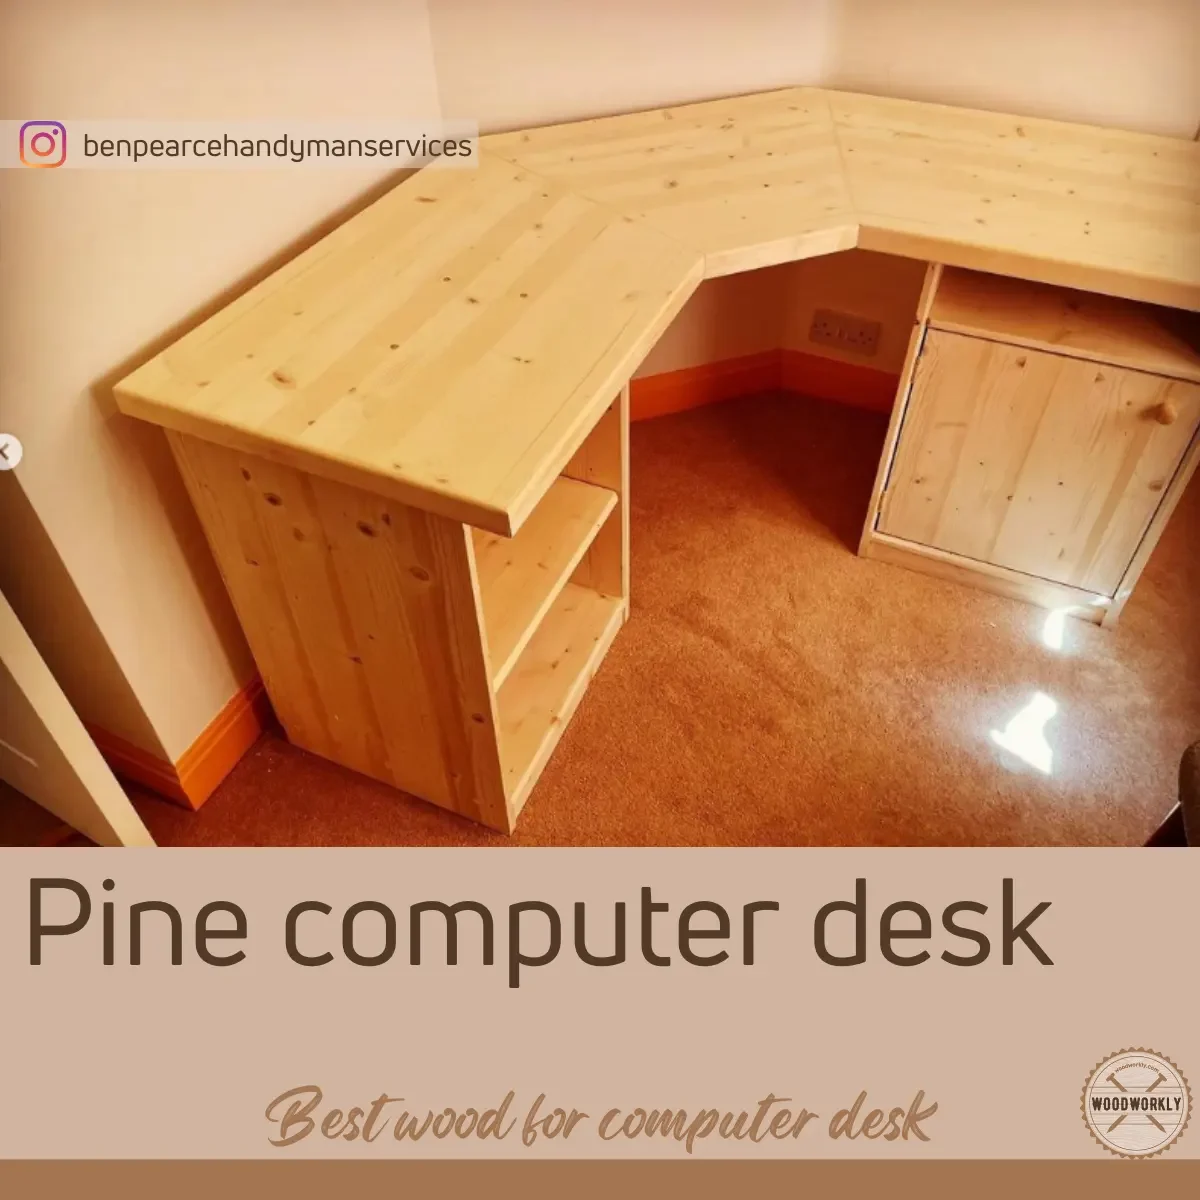 Pine computer desk